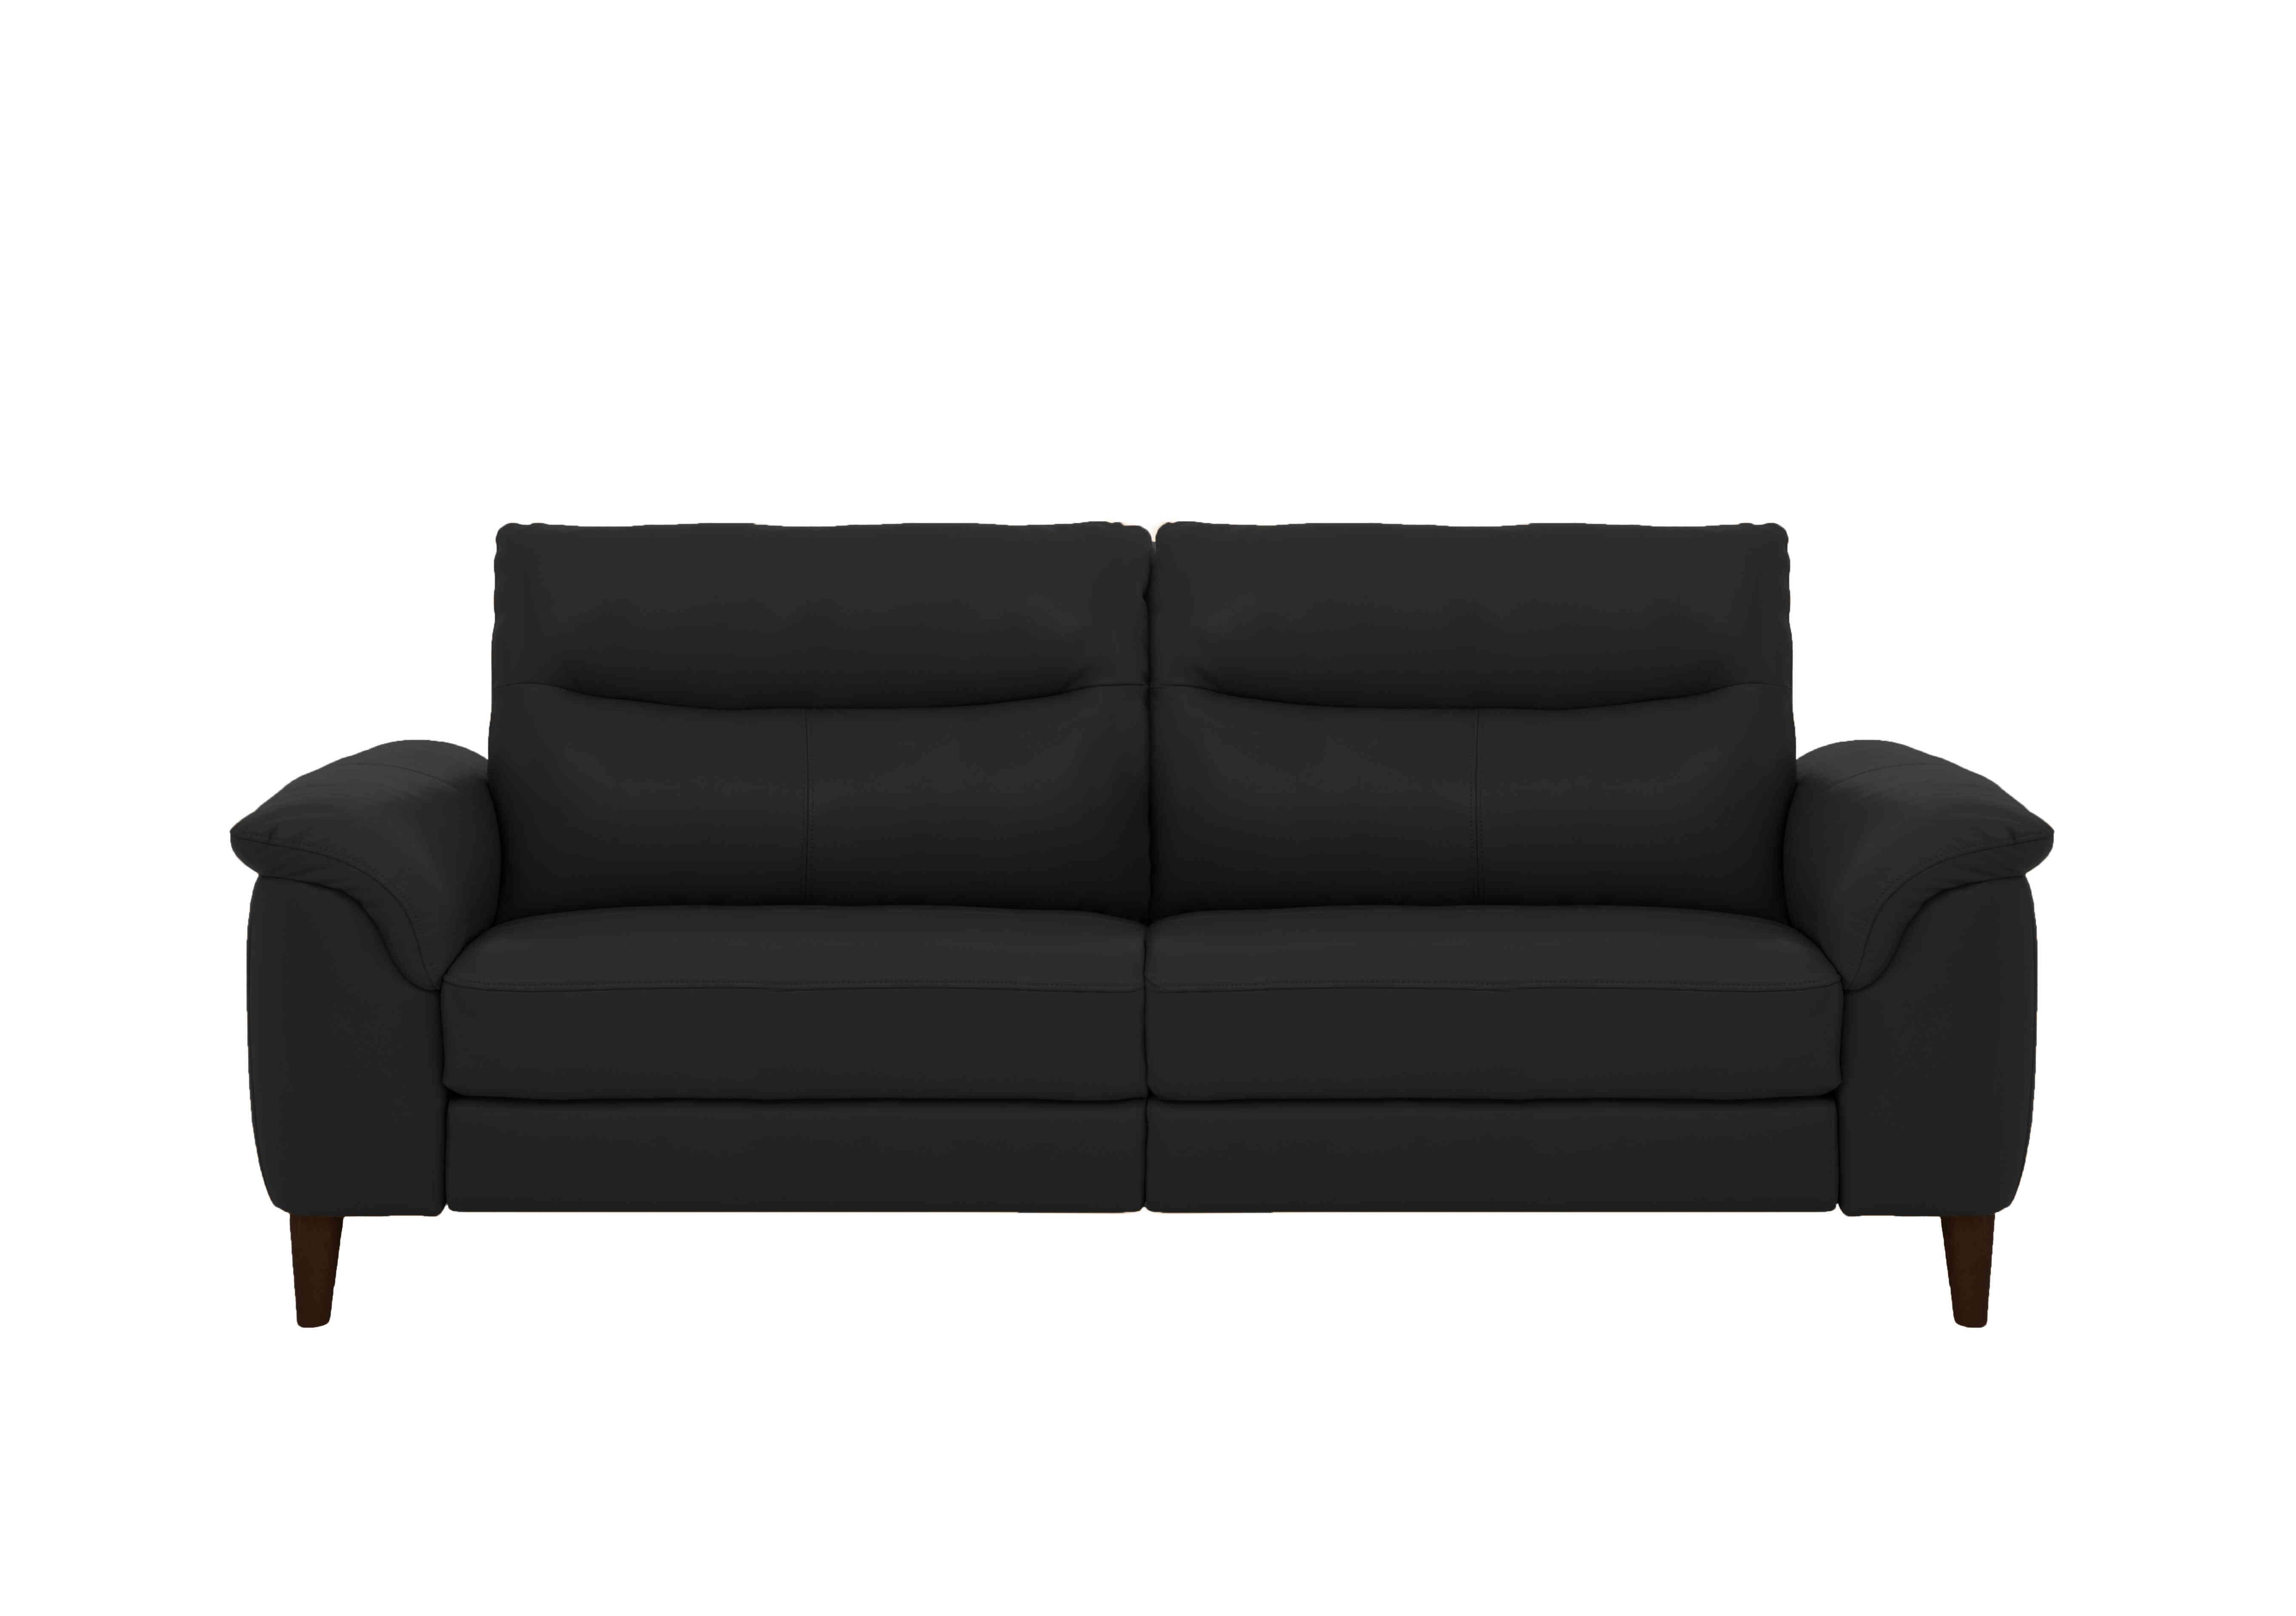 Morgan 3 Seater Leather Sofa in Florida Black Cat-35/02 on Furniture Village